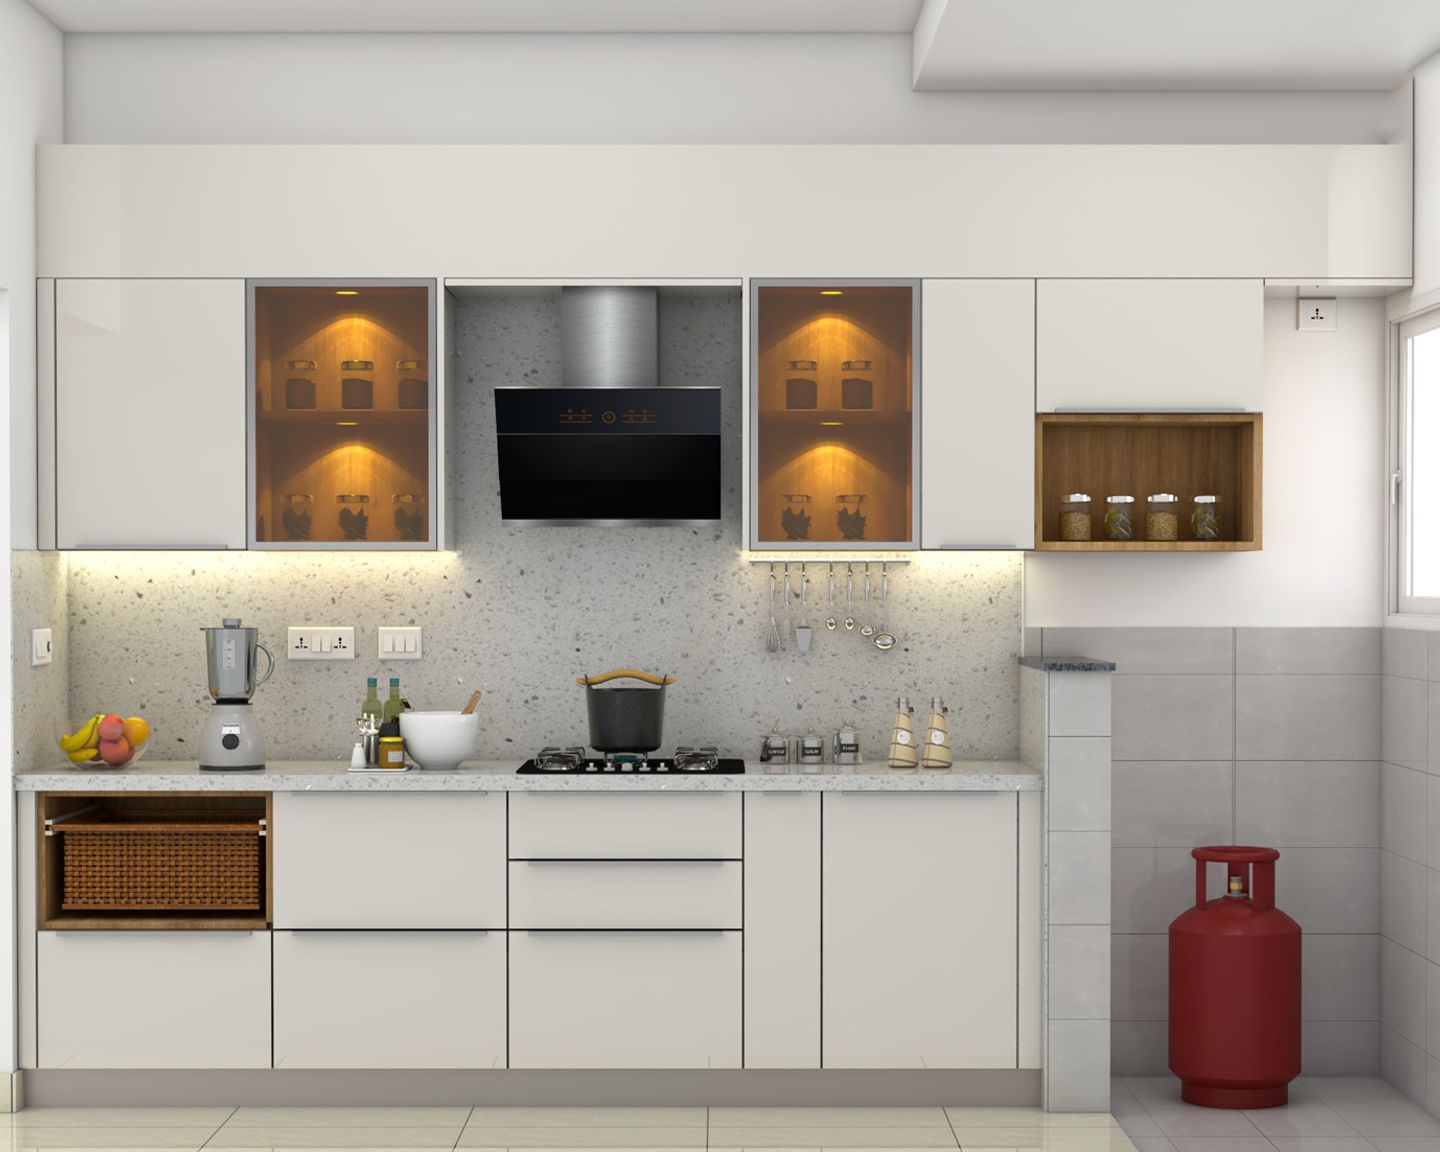 Parallel Kitchen Design Idea - Livspace